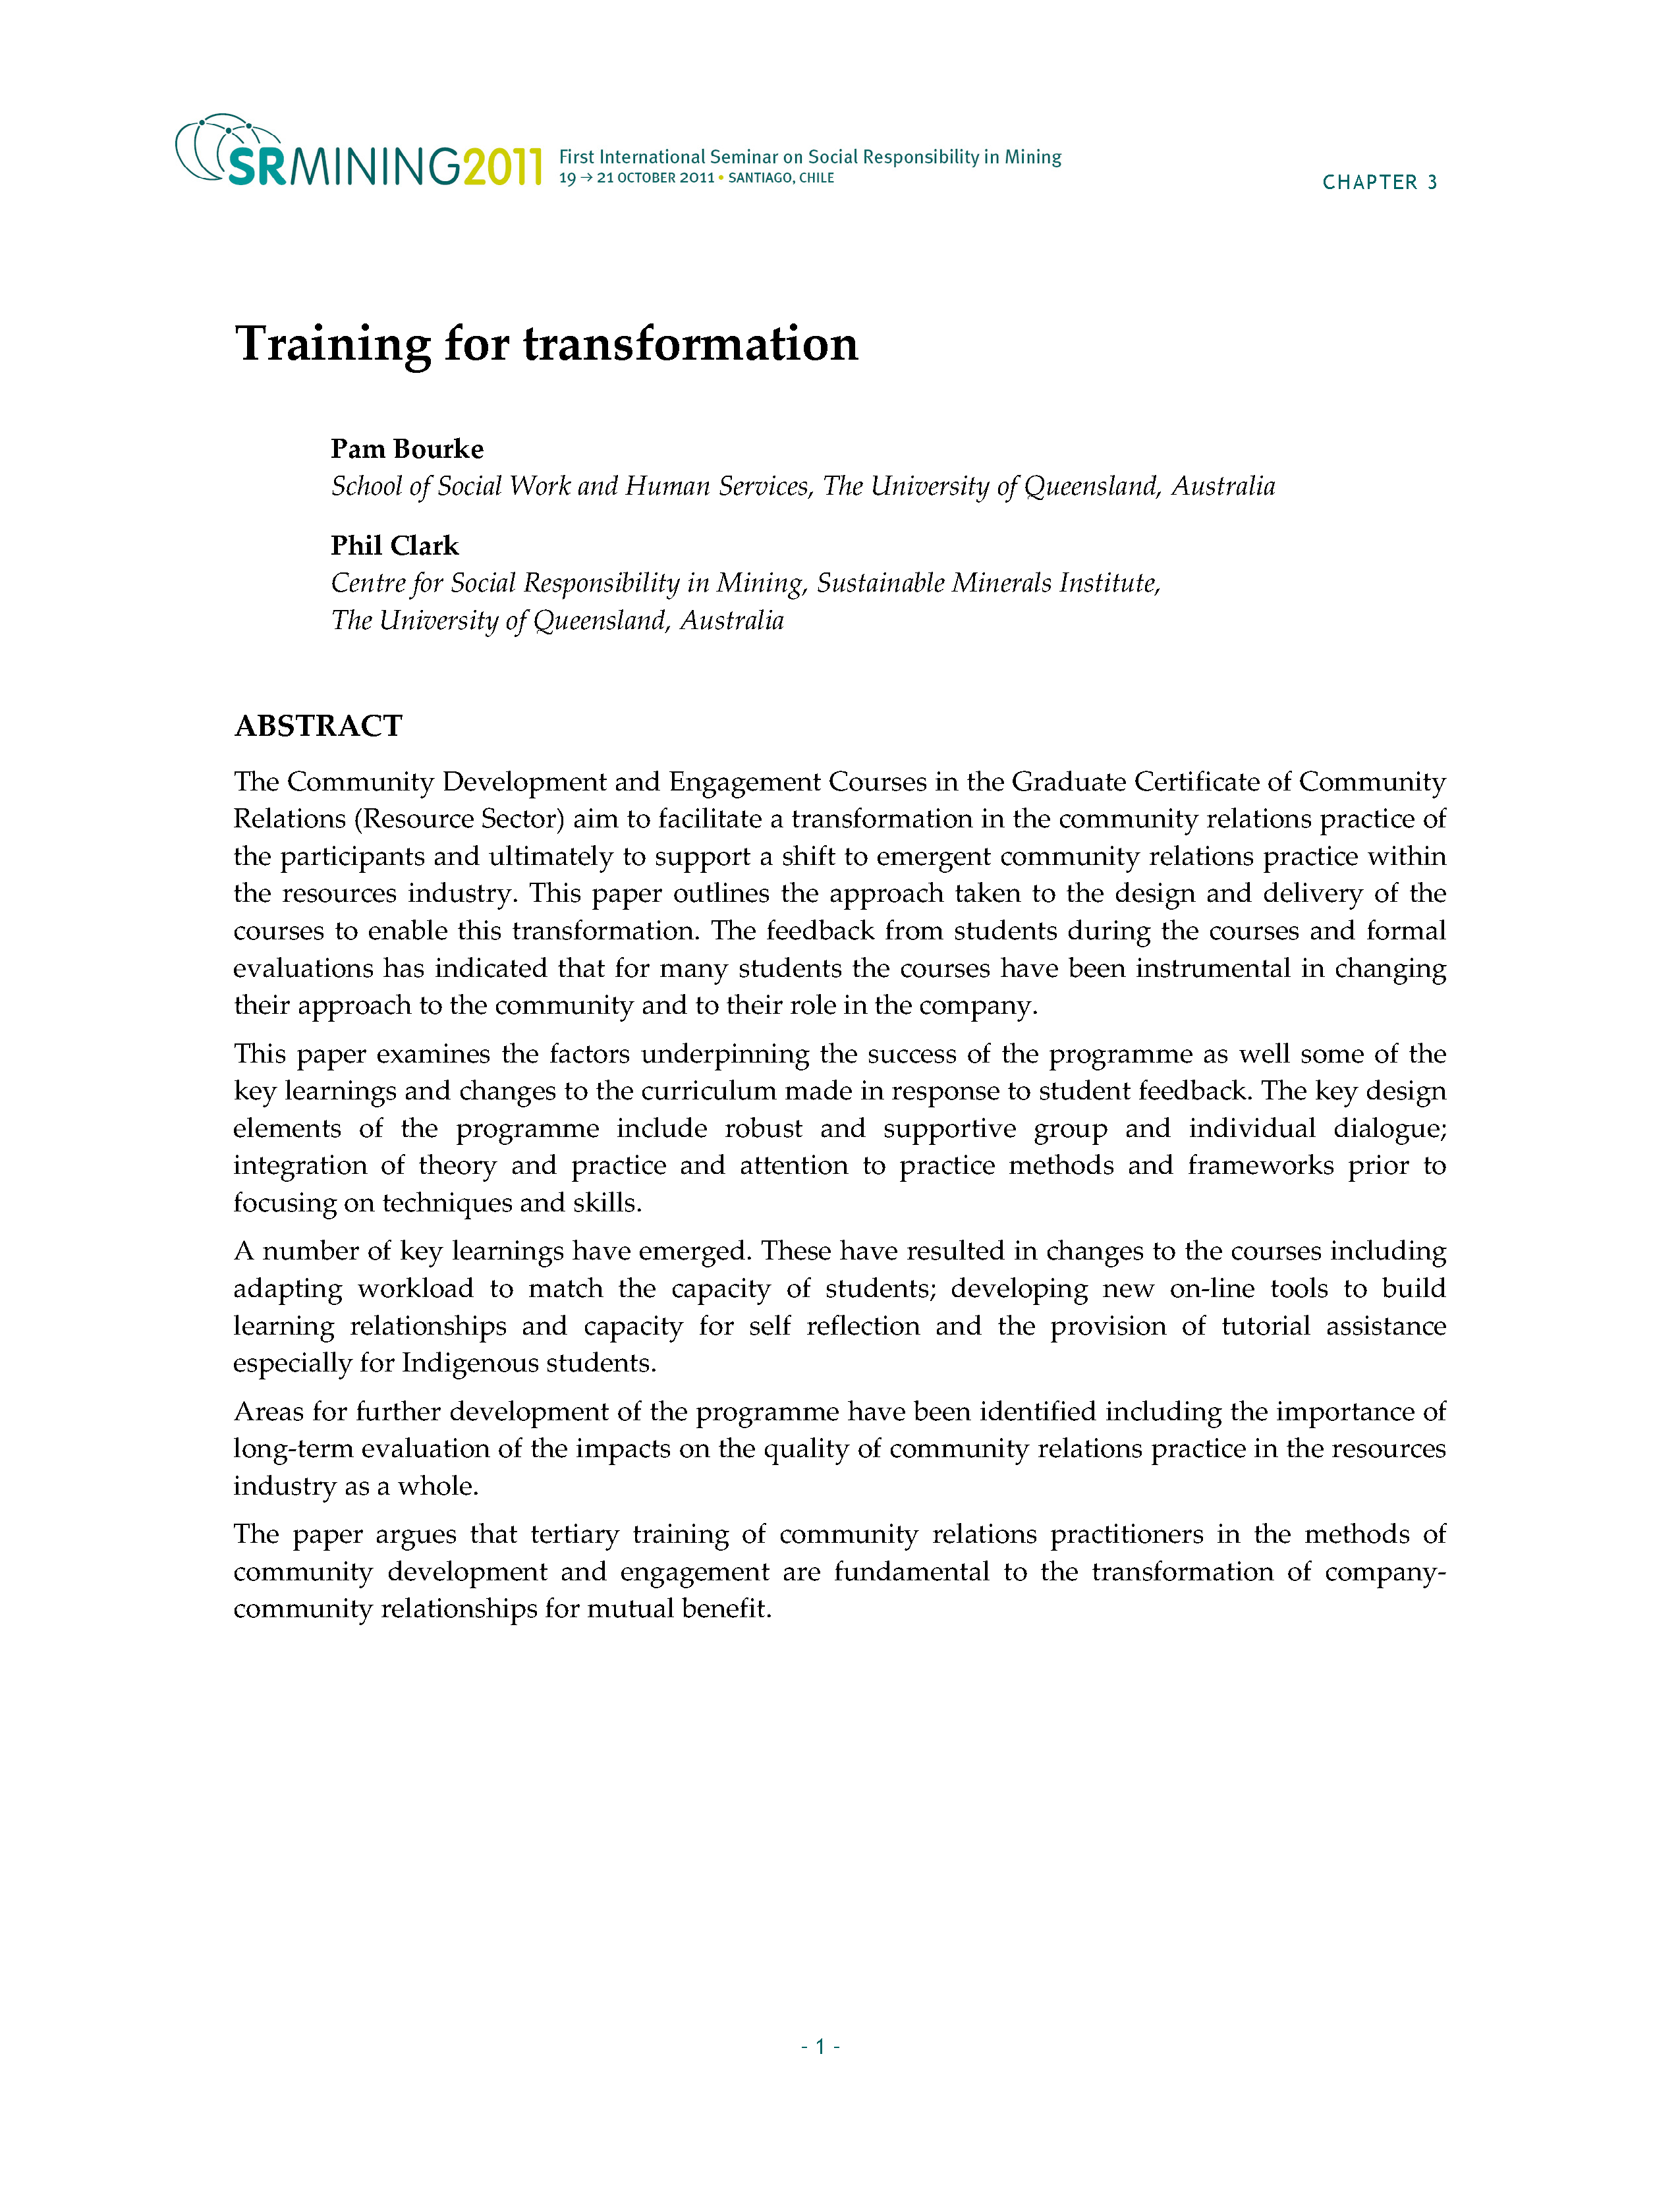 Training for Transformation